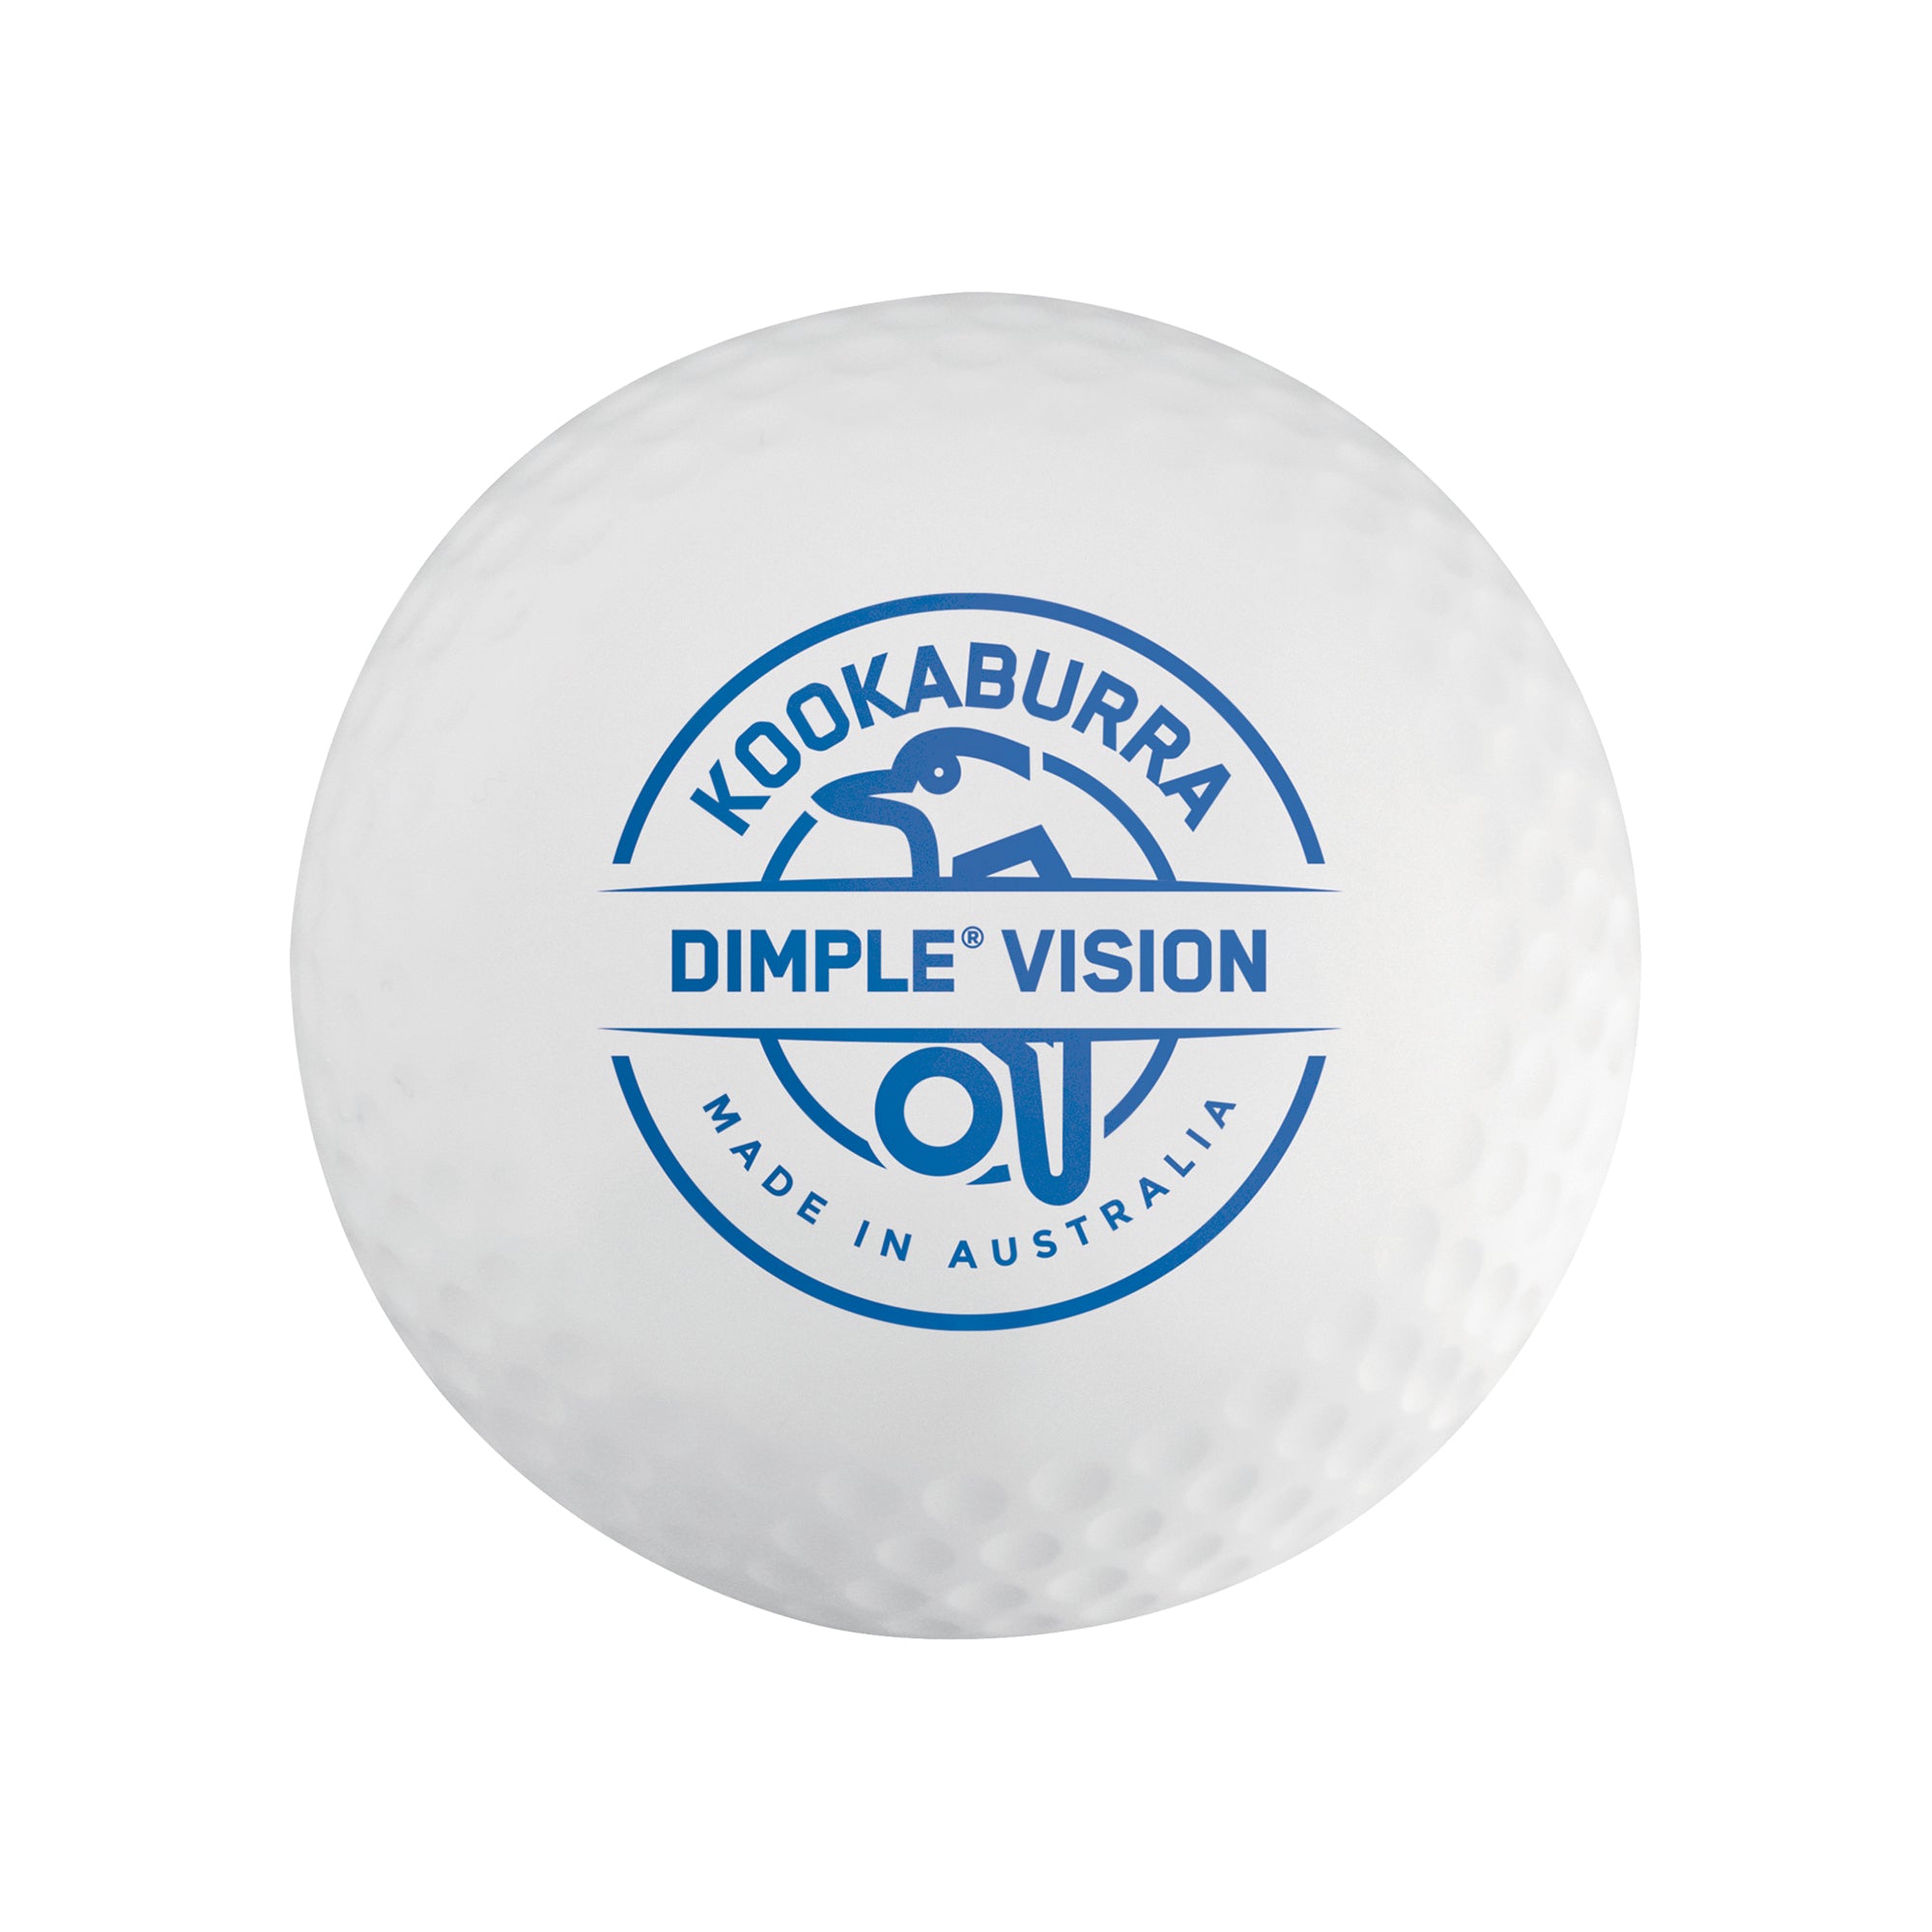 Kookaburra Dimple Vision Hockey Ball - White